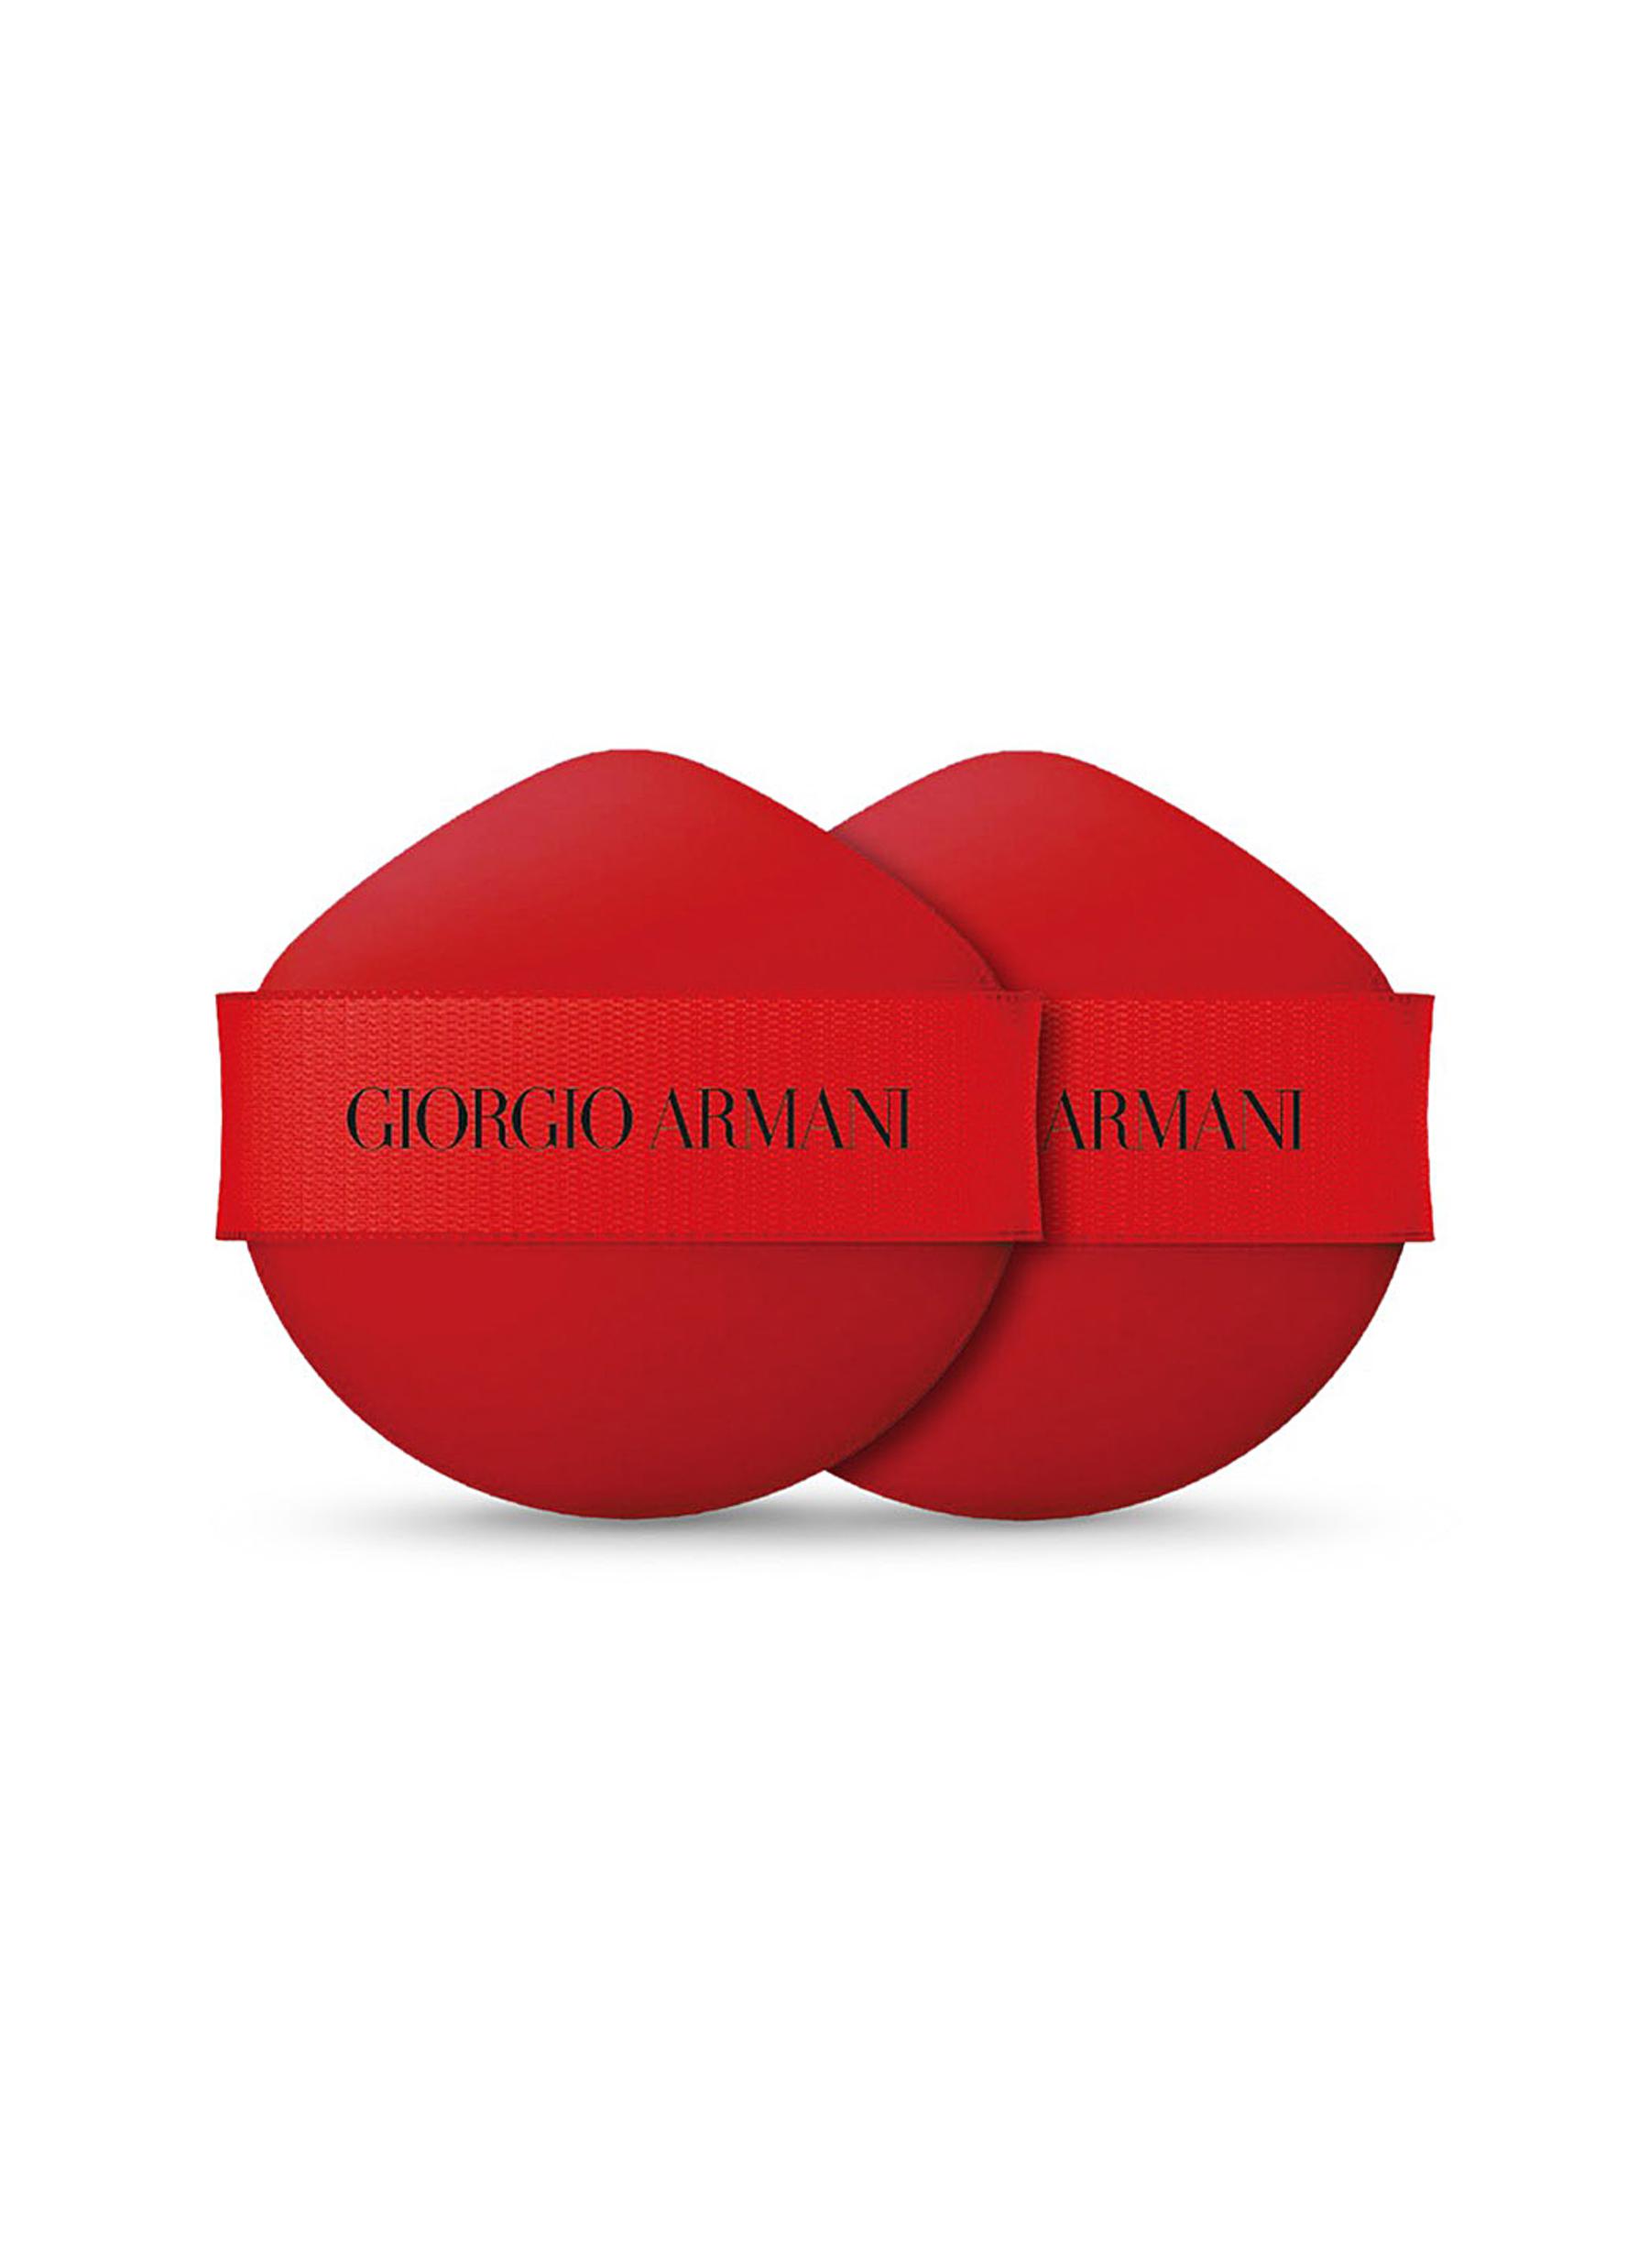 GIORGIO ARMANI BEAUTY | My Armani to Go 